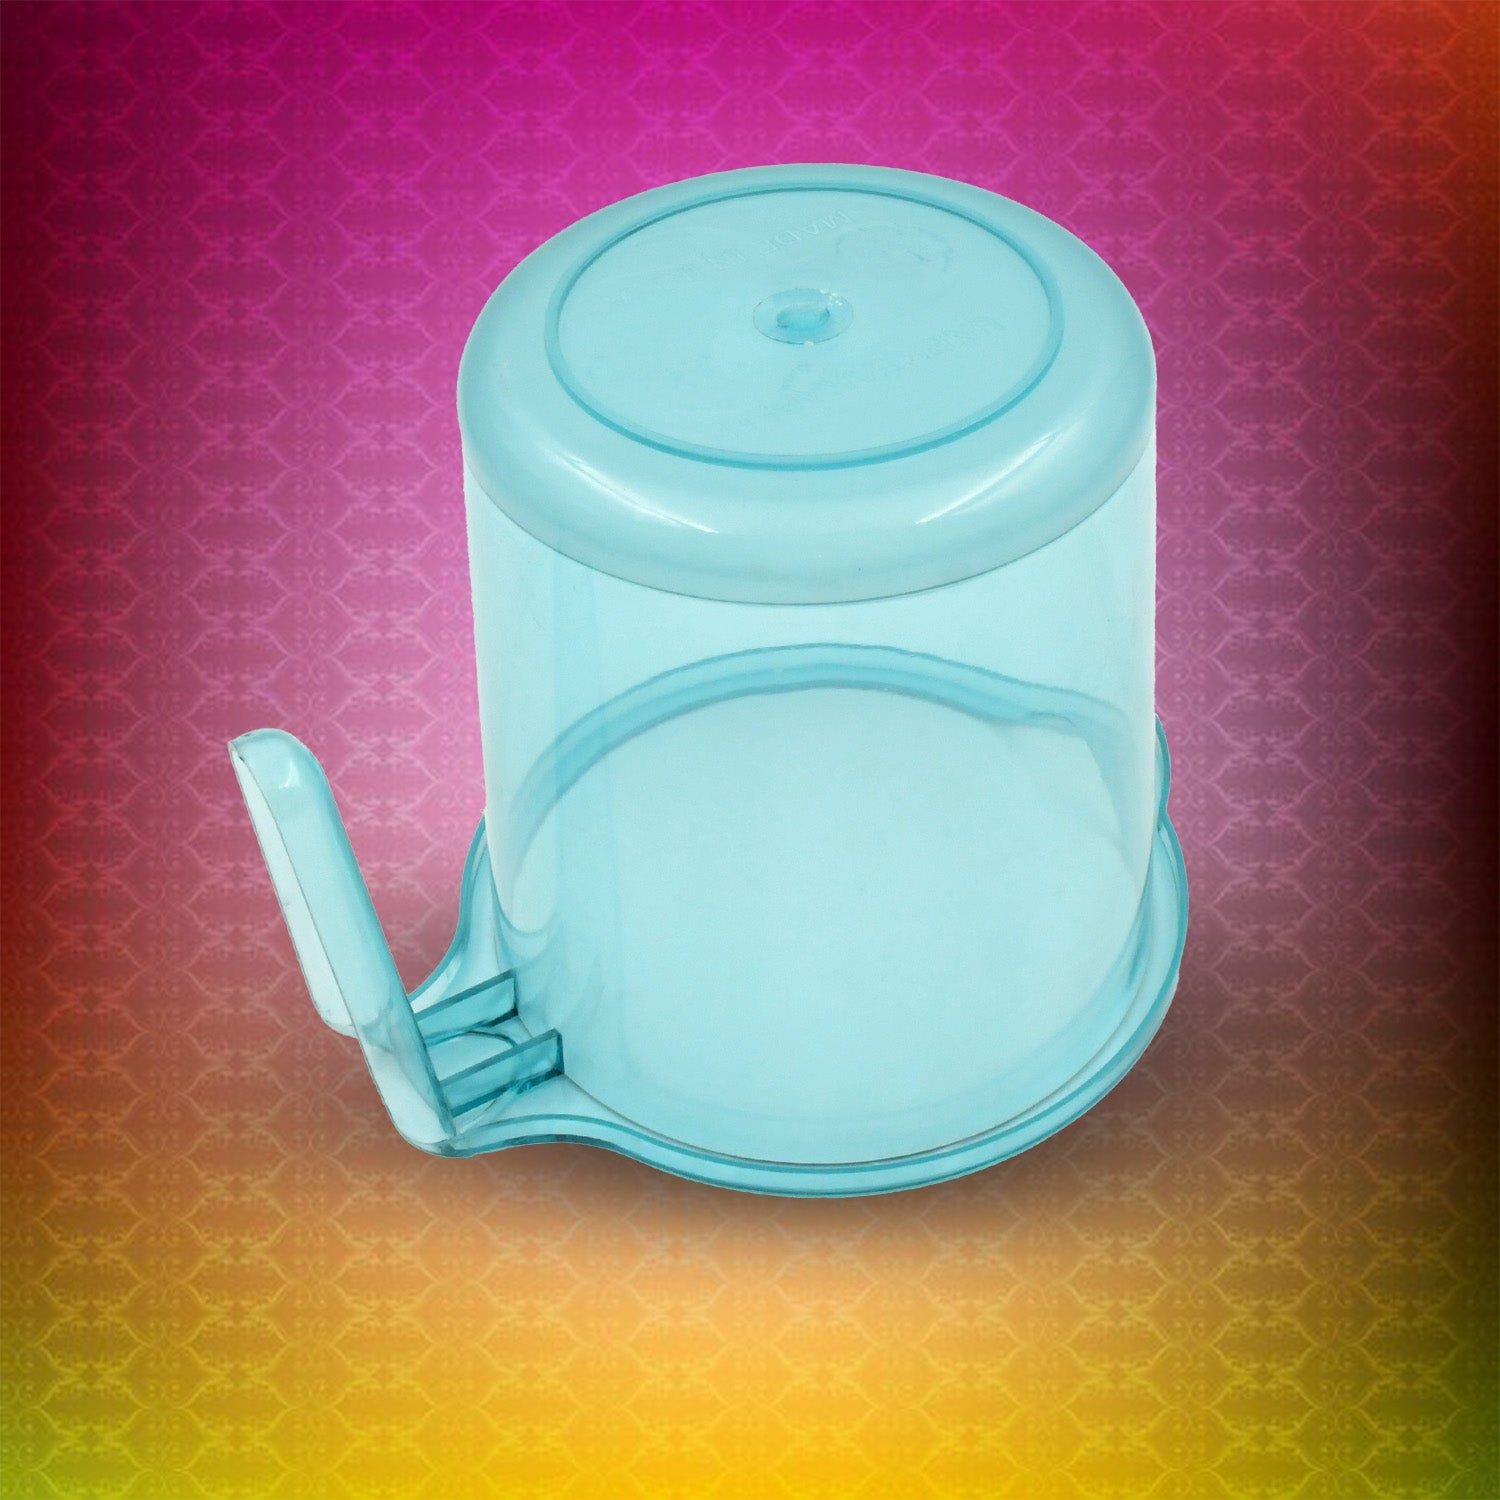 4240 Bathroom Accessories & Organization - High Quality Plastic Mug for Bathroom, PP Material, Muga (Mix Color 1 Pc)